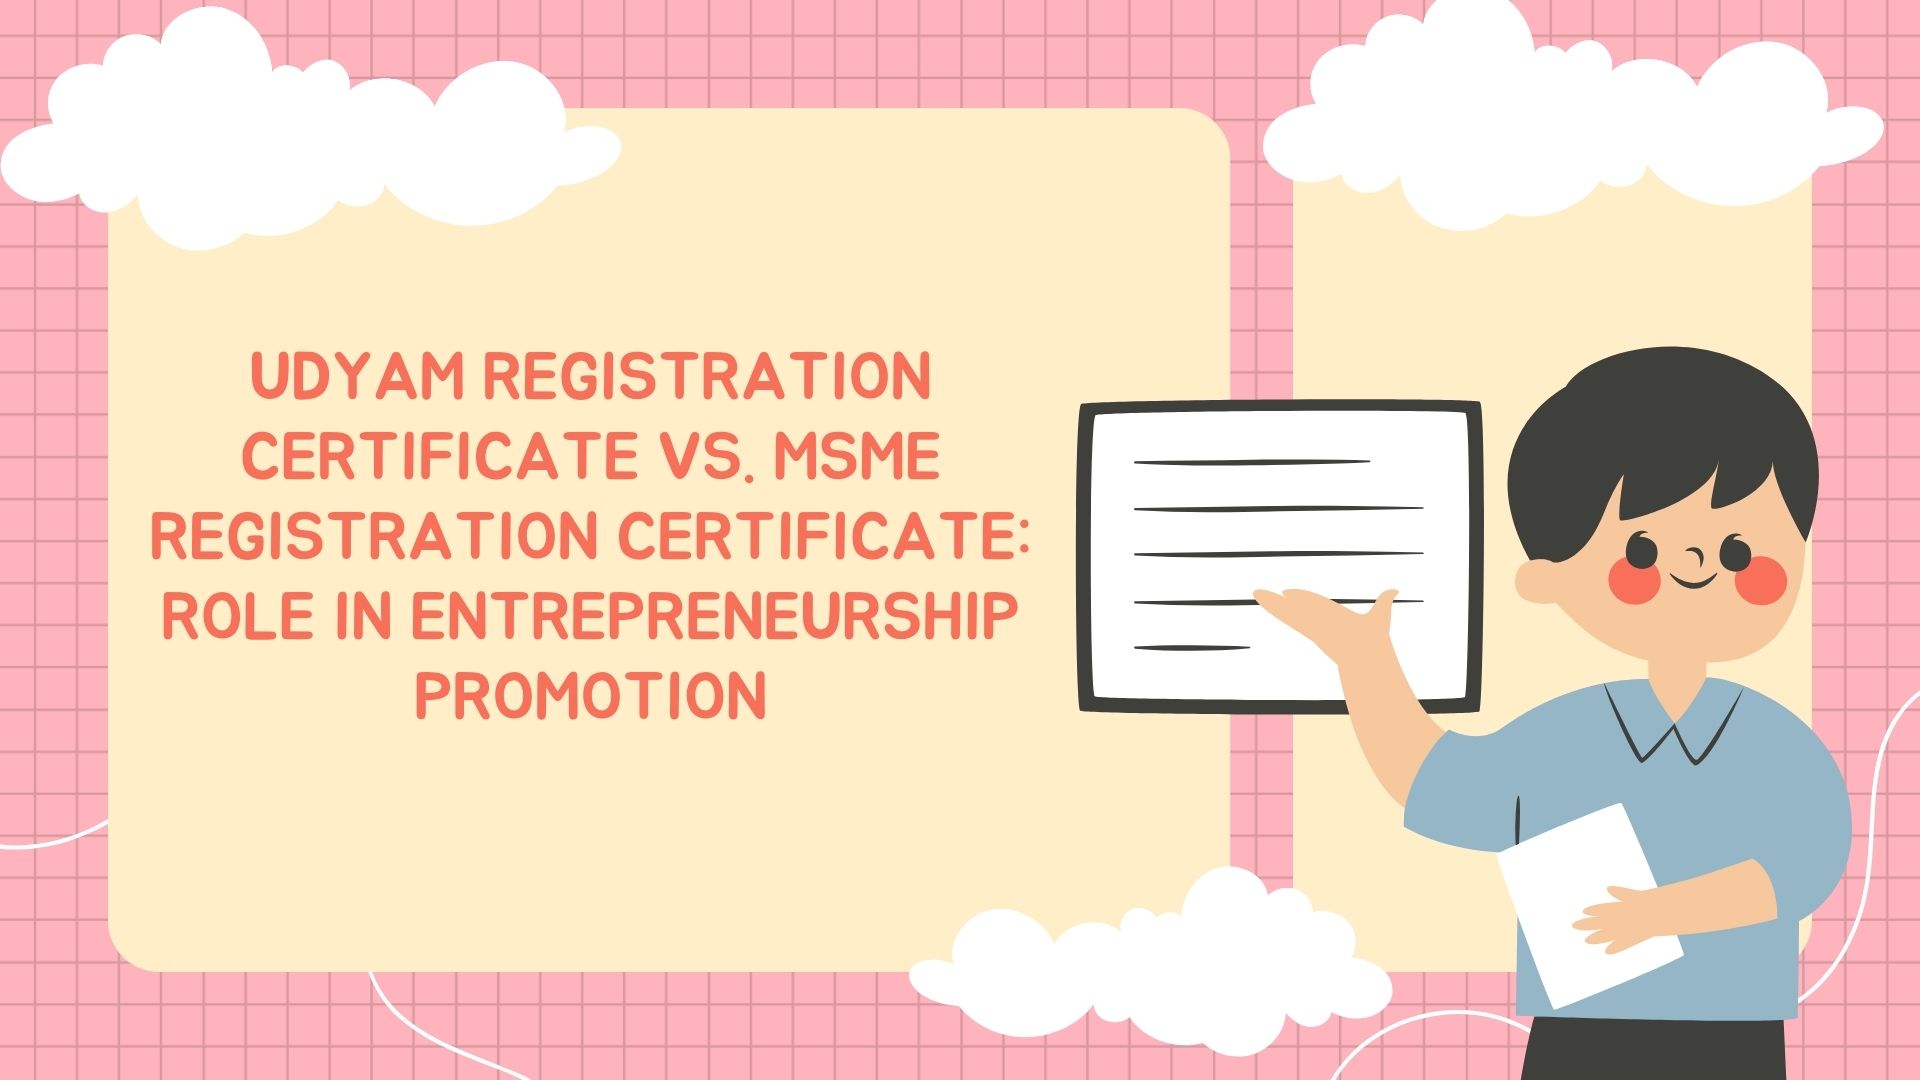 Udyam Registration Certificate vs. MSME Registration Certificate Role in Entrepreneurship Promotion